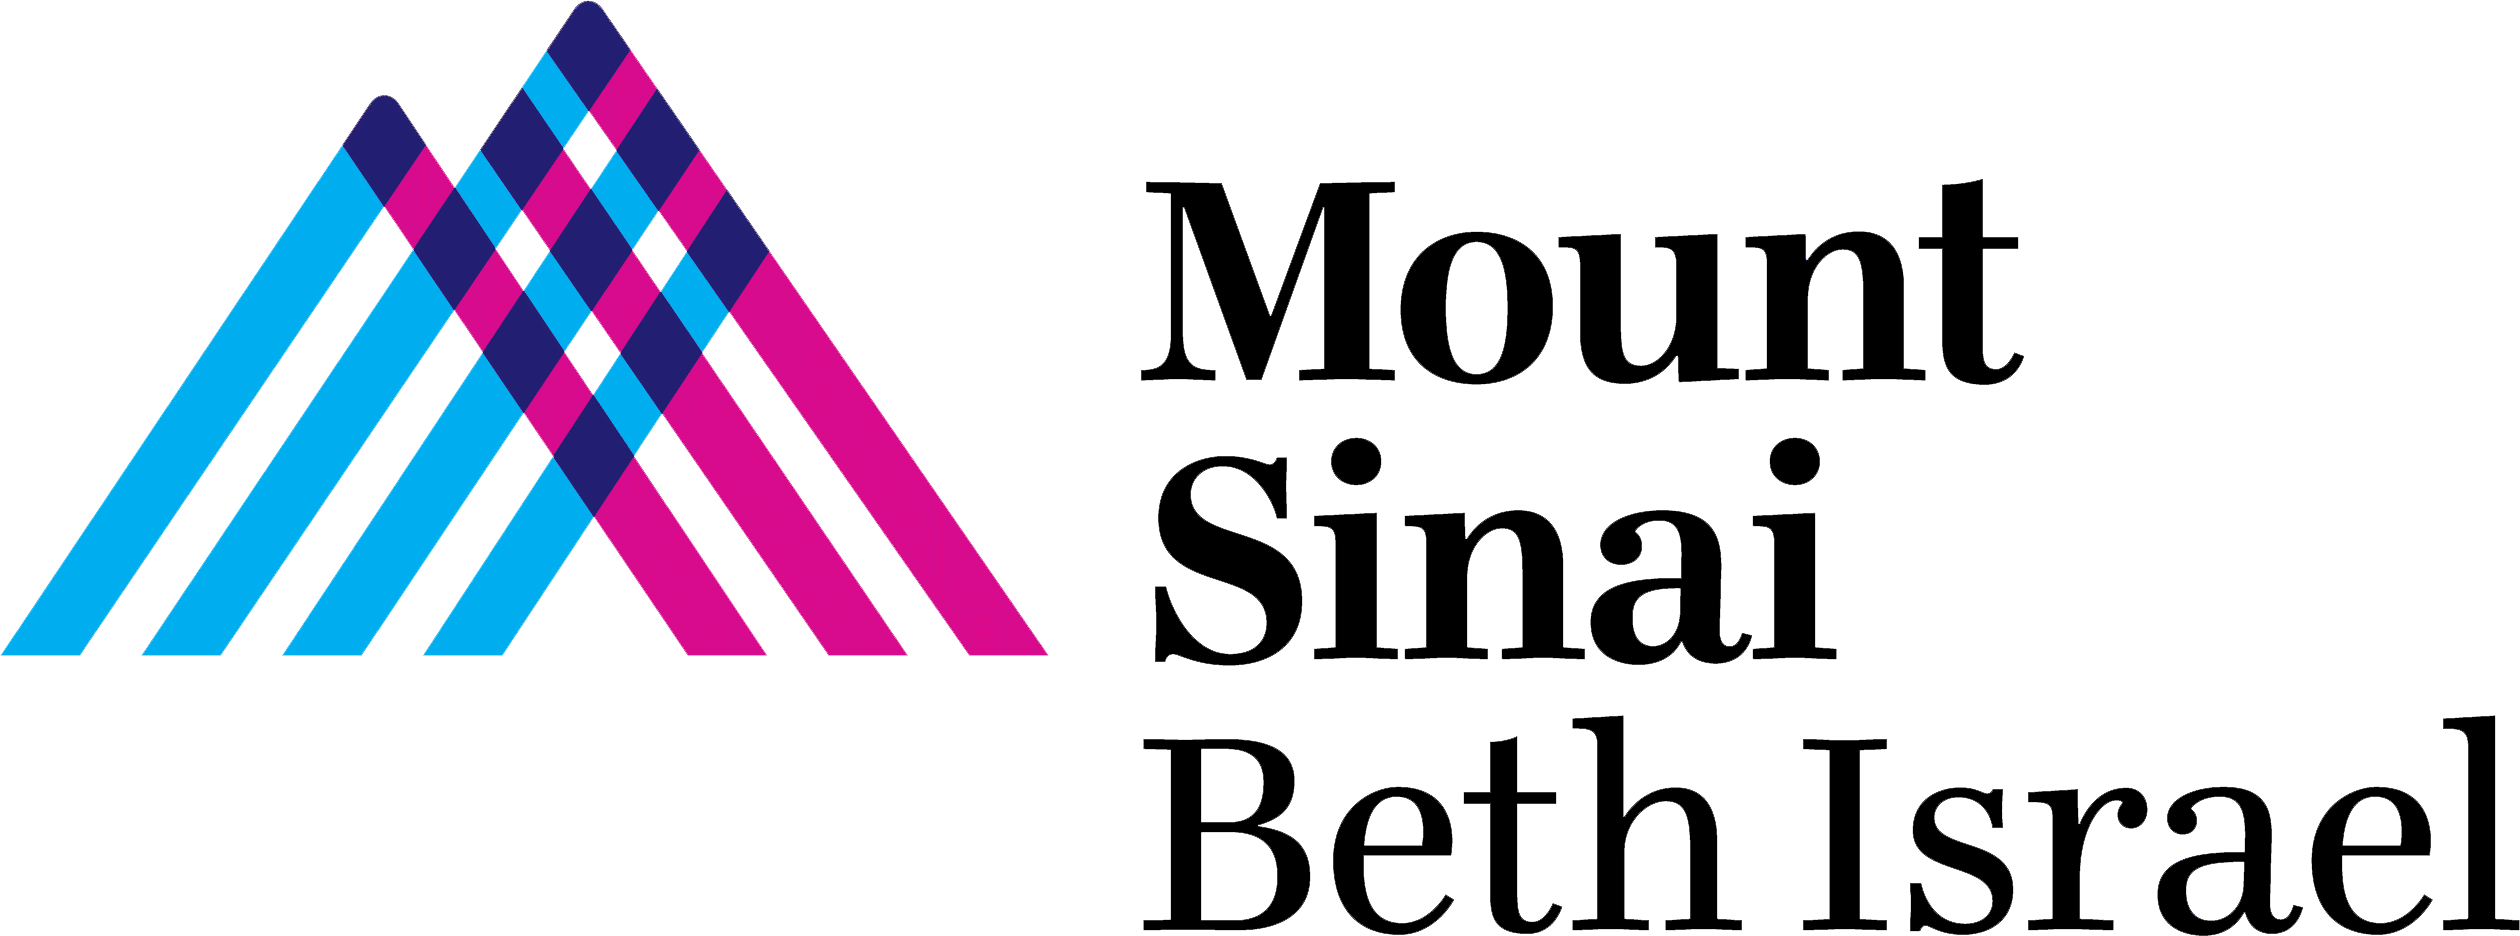 Mount Sinai Beth Israel - Mount Sinai Health System